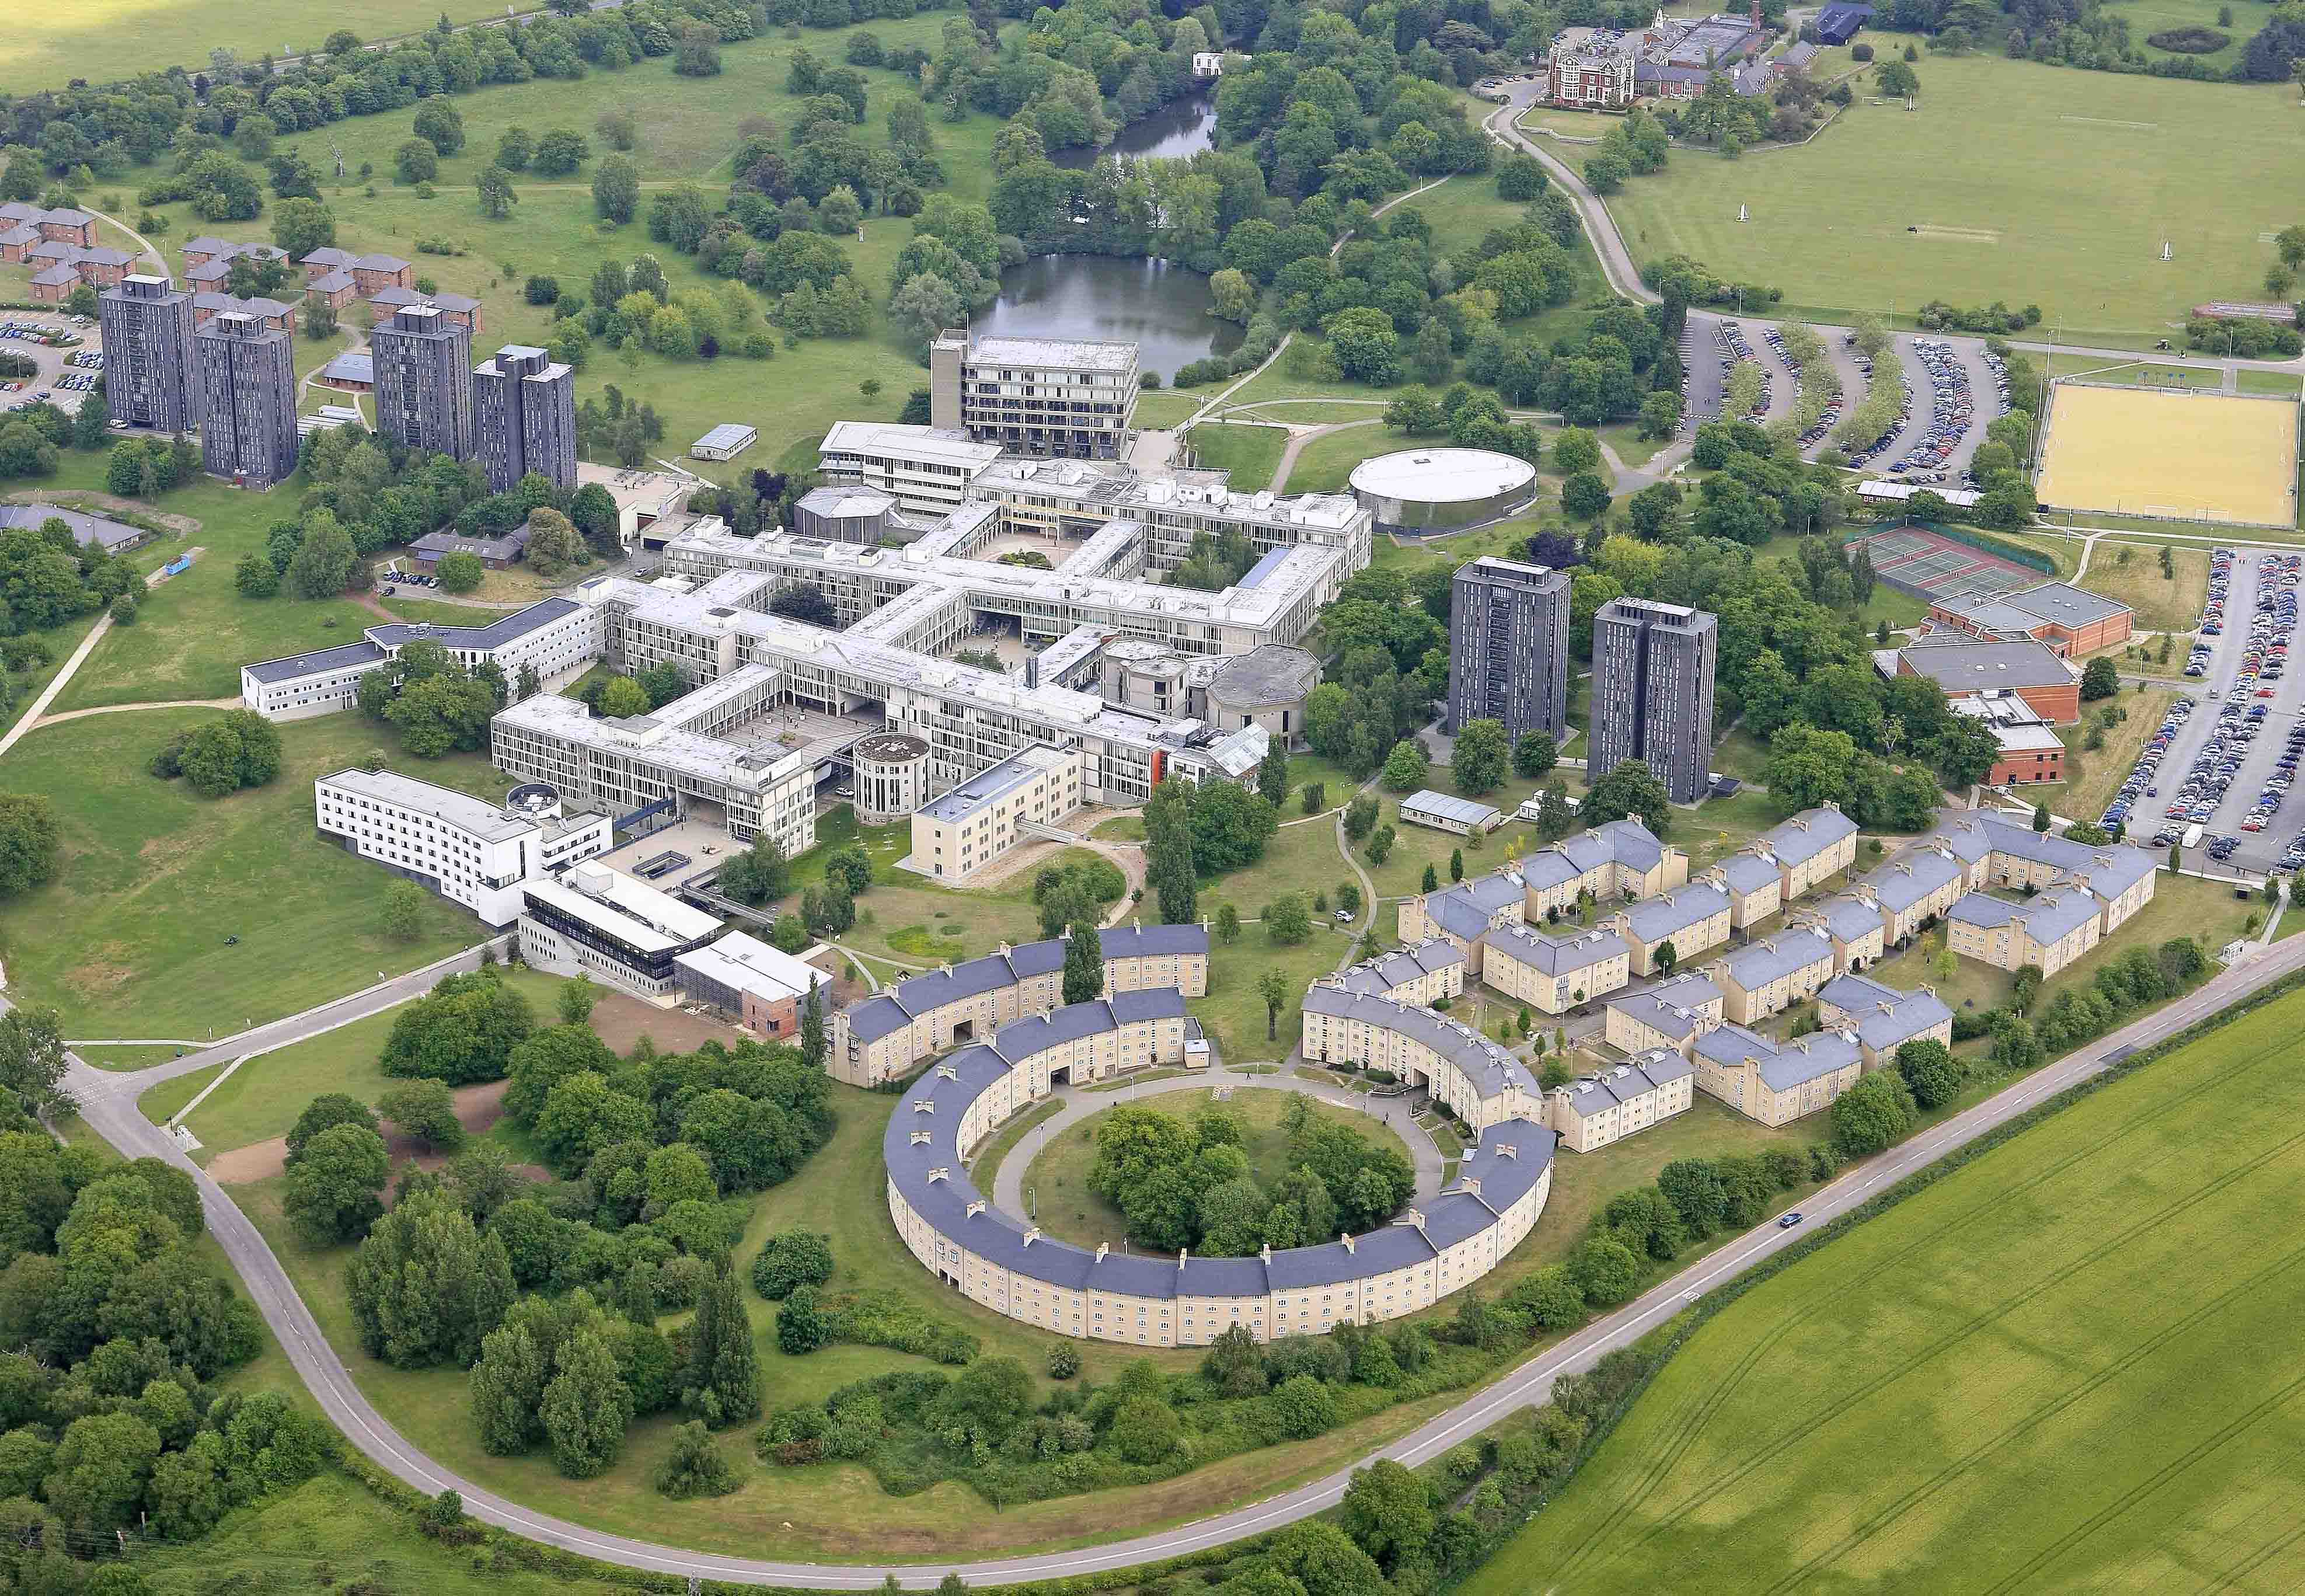 University of Essex - Colchester